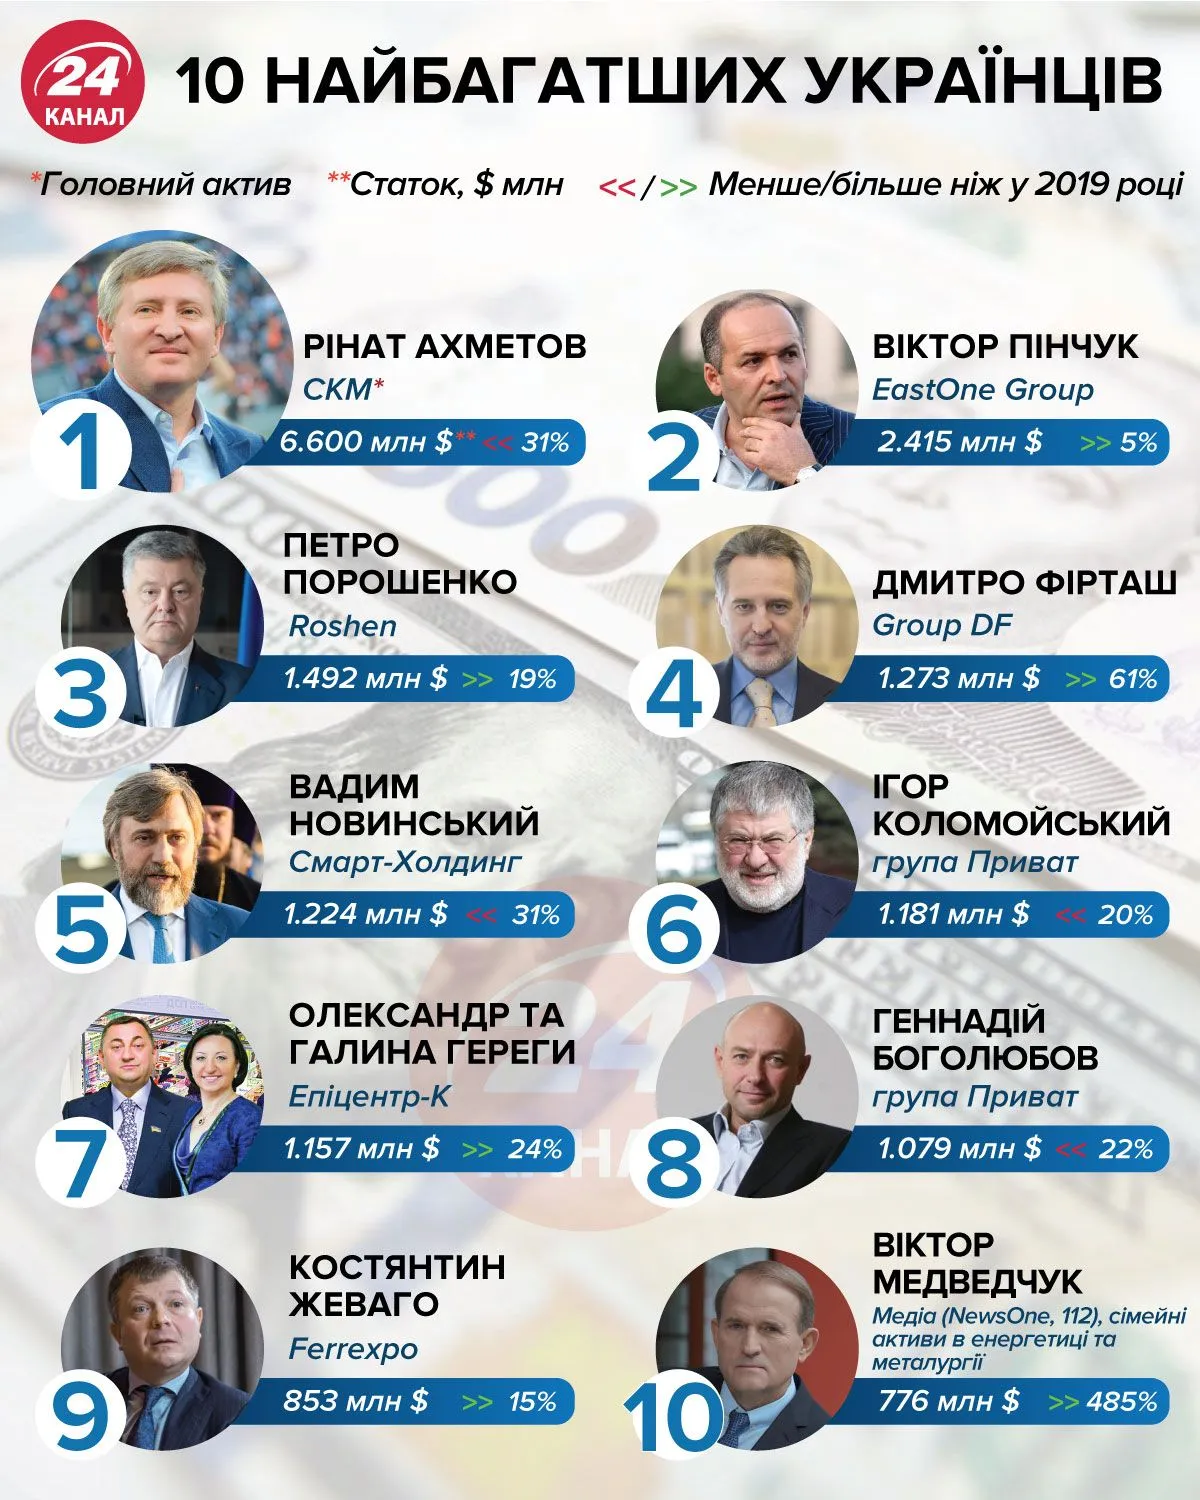 10 найбагатших українців інфографіка 24 канал